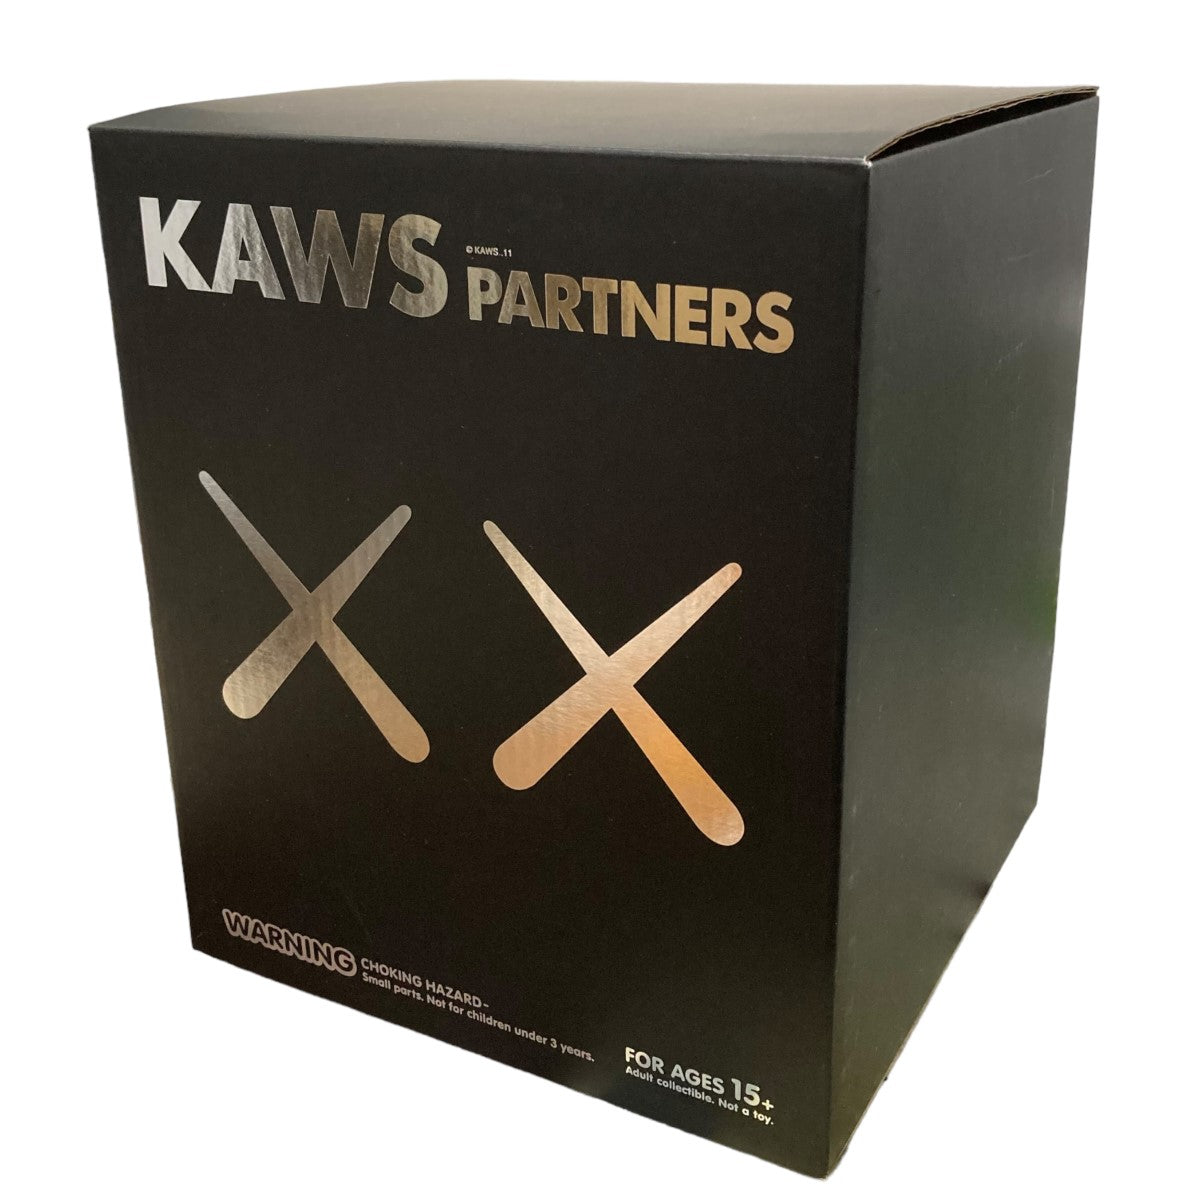 KAWS PARTNERSオリジナルフェイク人体模型